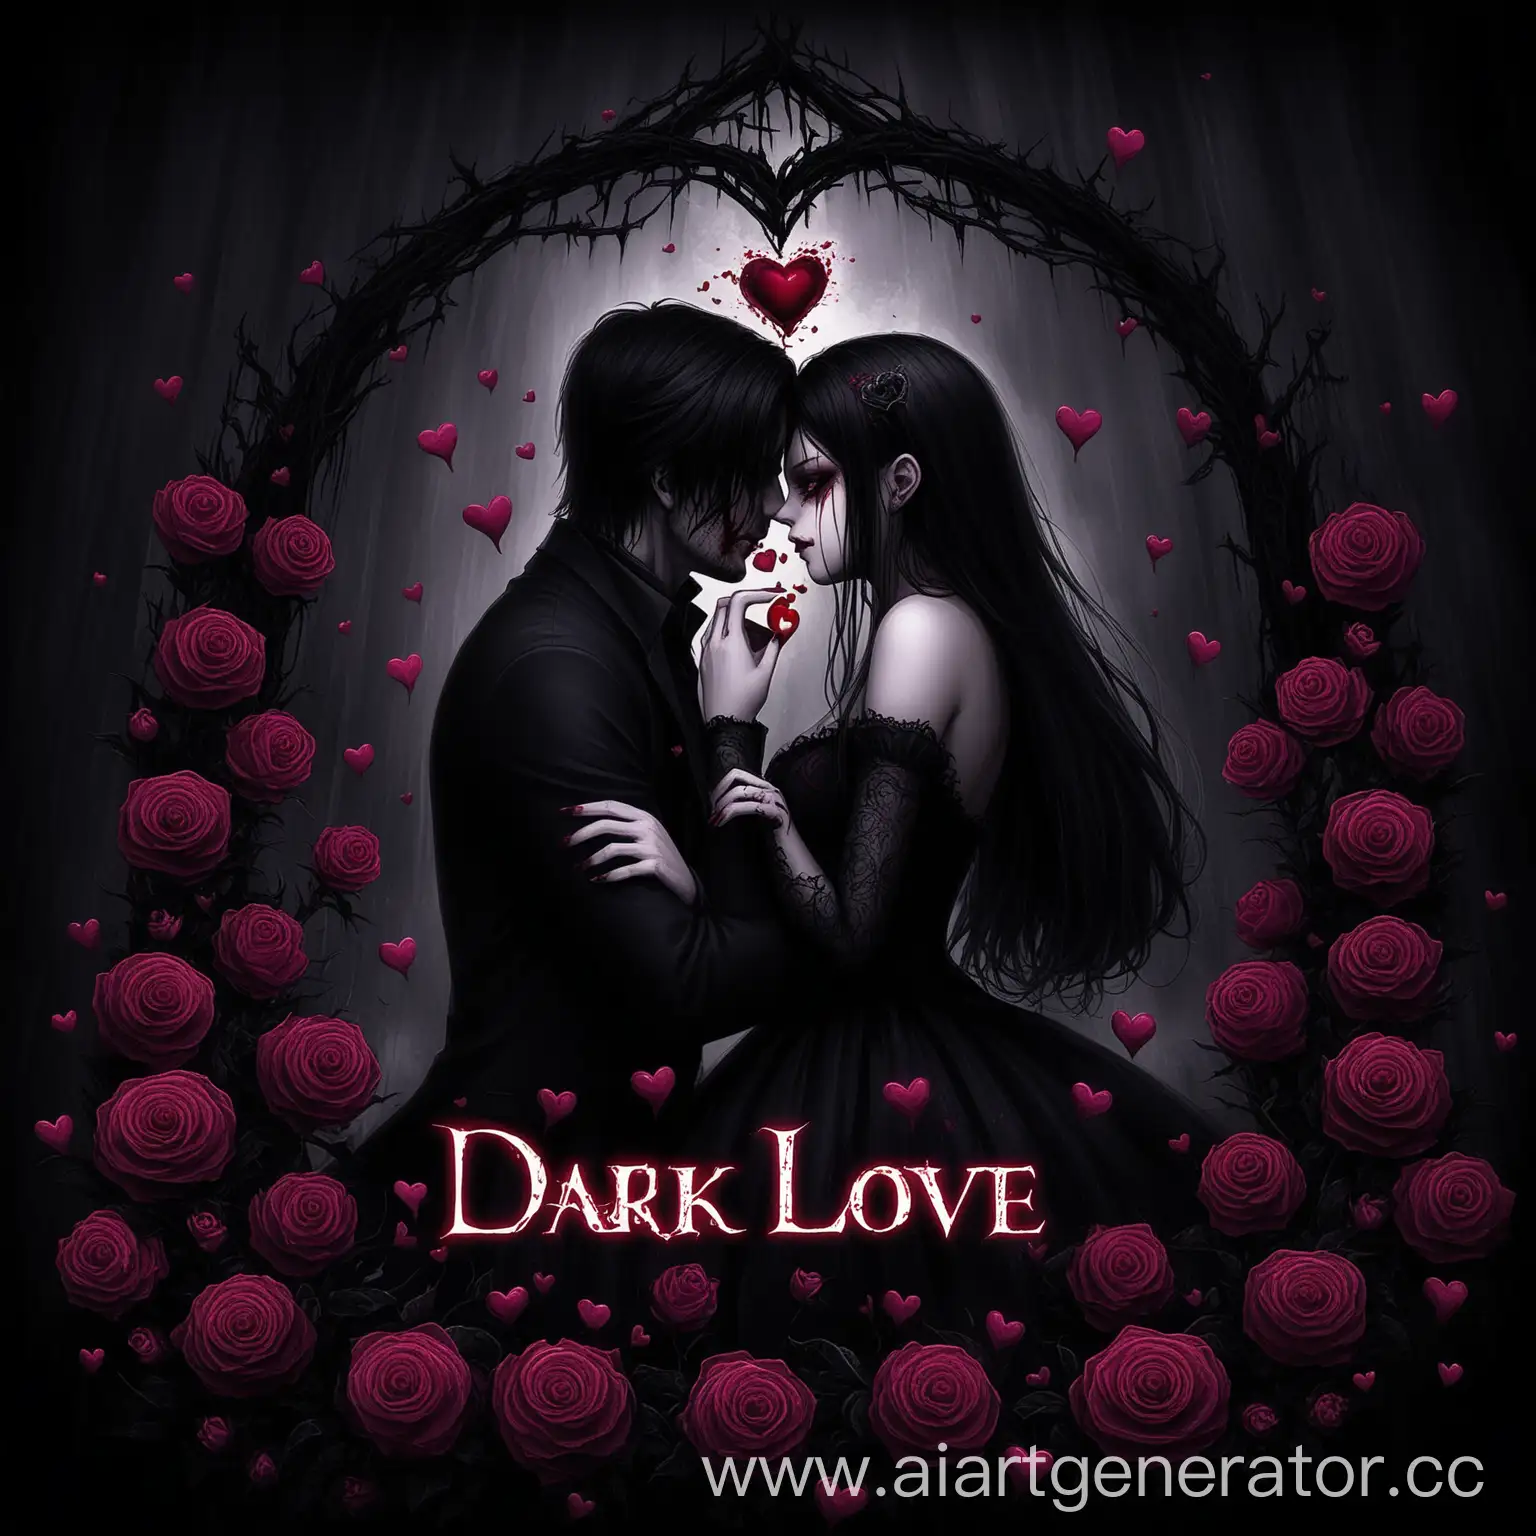 Dark love
